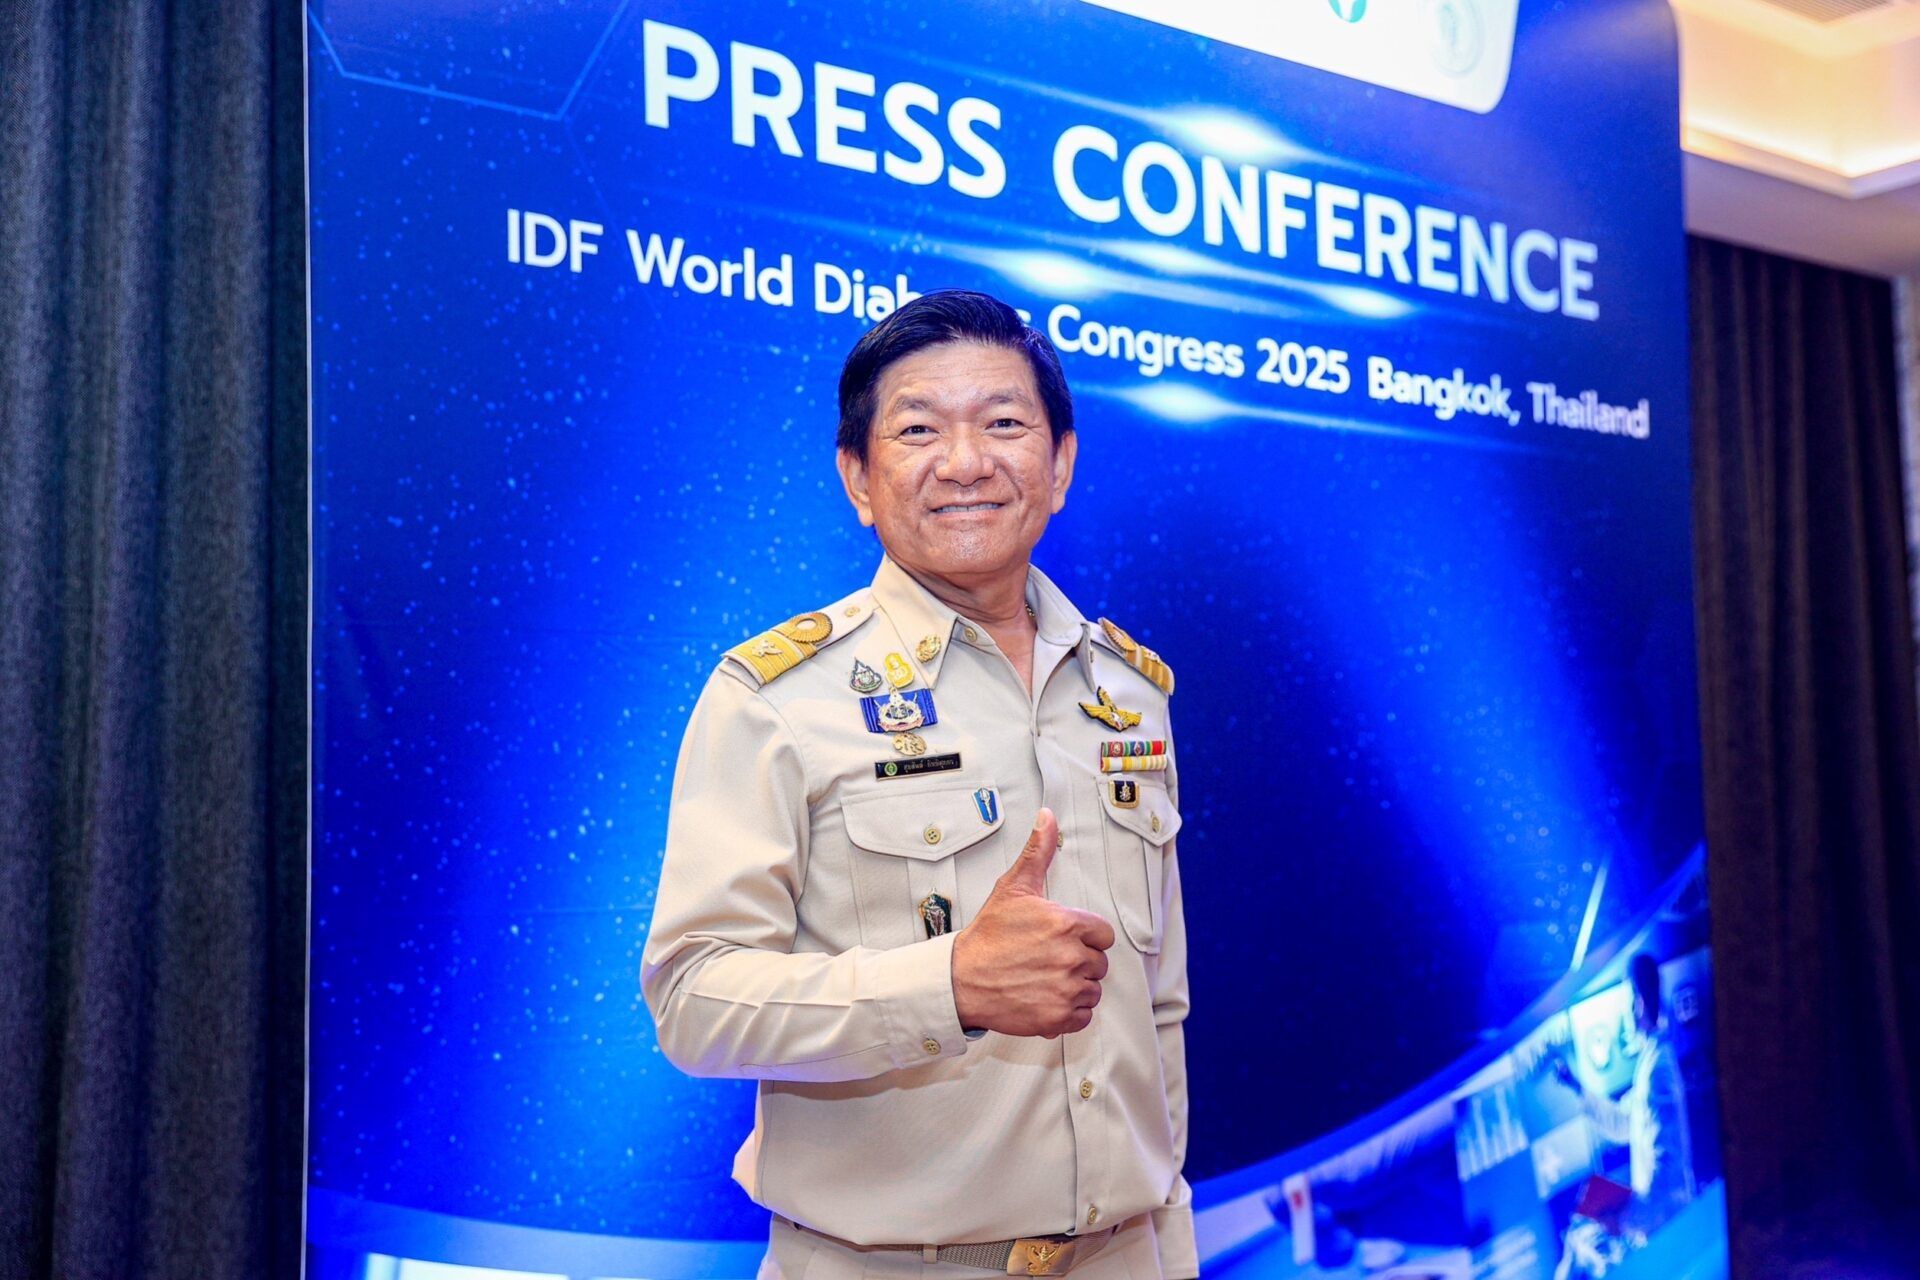 IDF World Diabetes Congress 2025 1